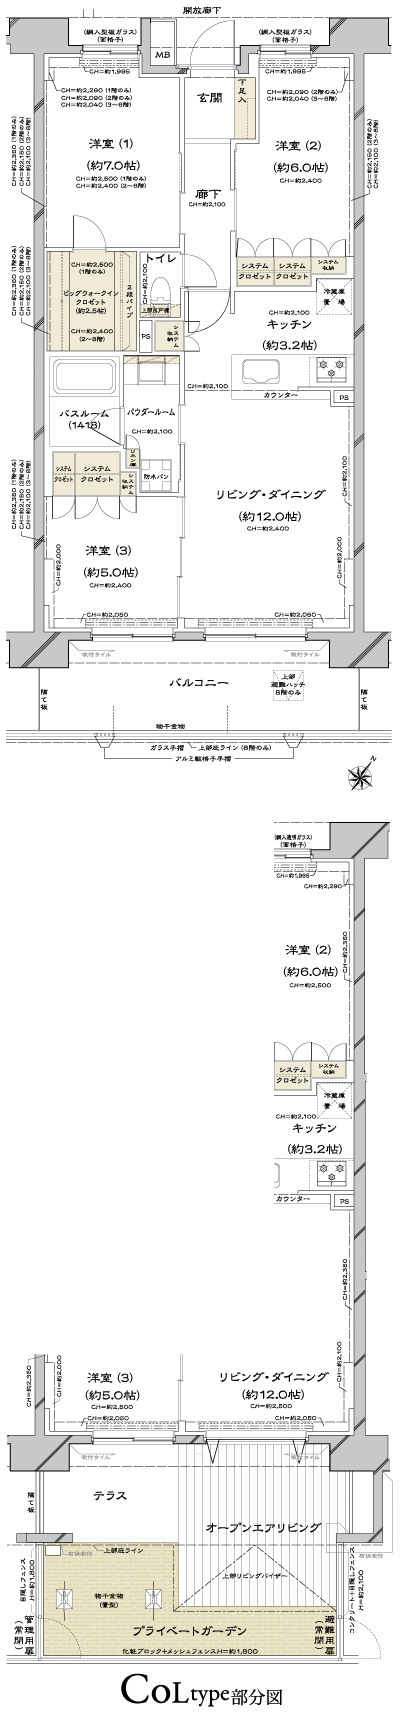 Floor: 3LDK + OL + BW + T + PG, occupied area: 75.31 sq m